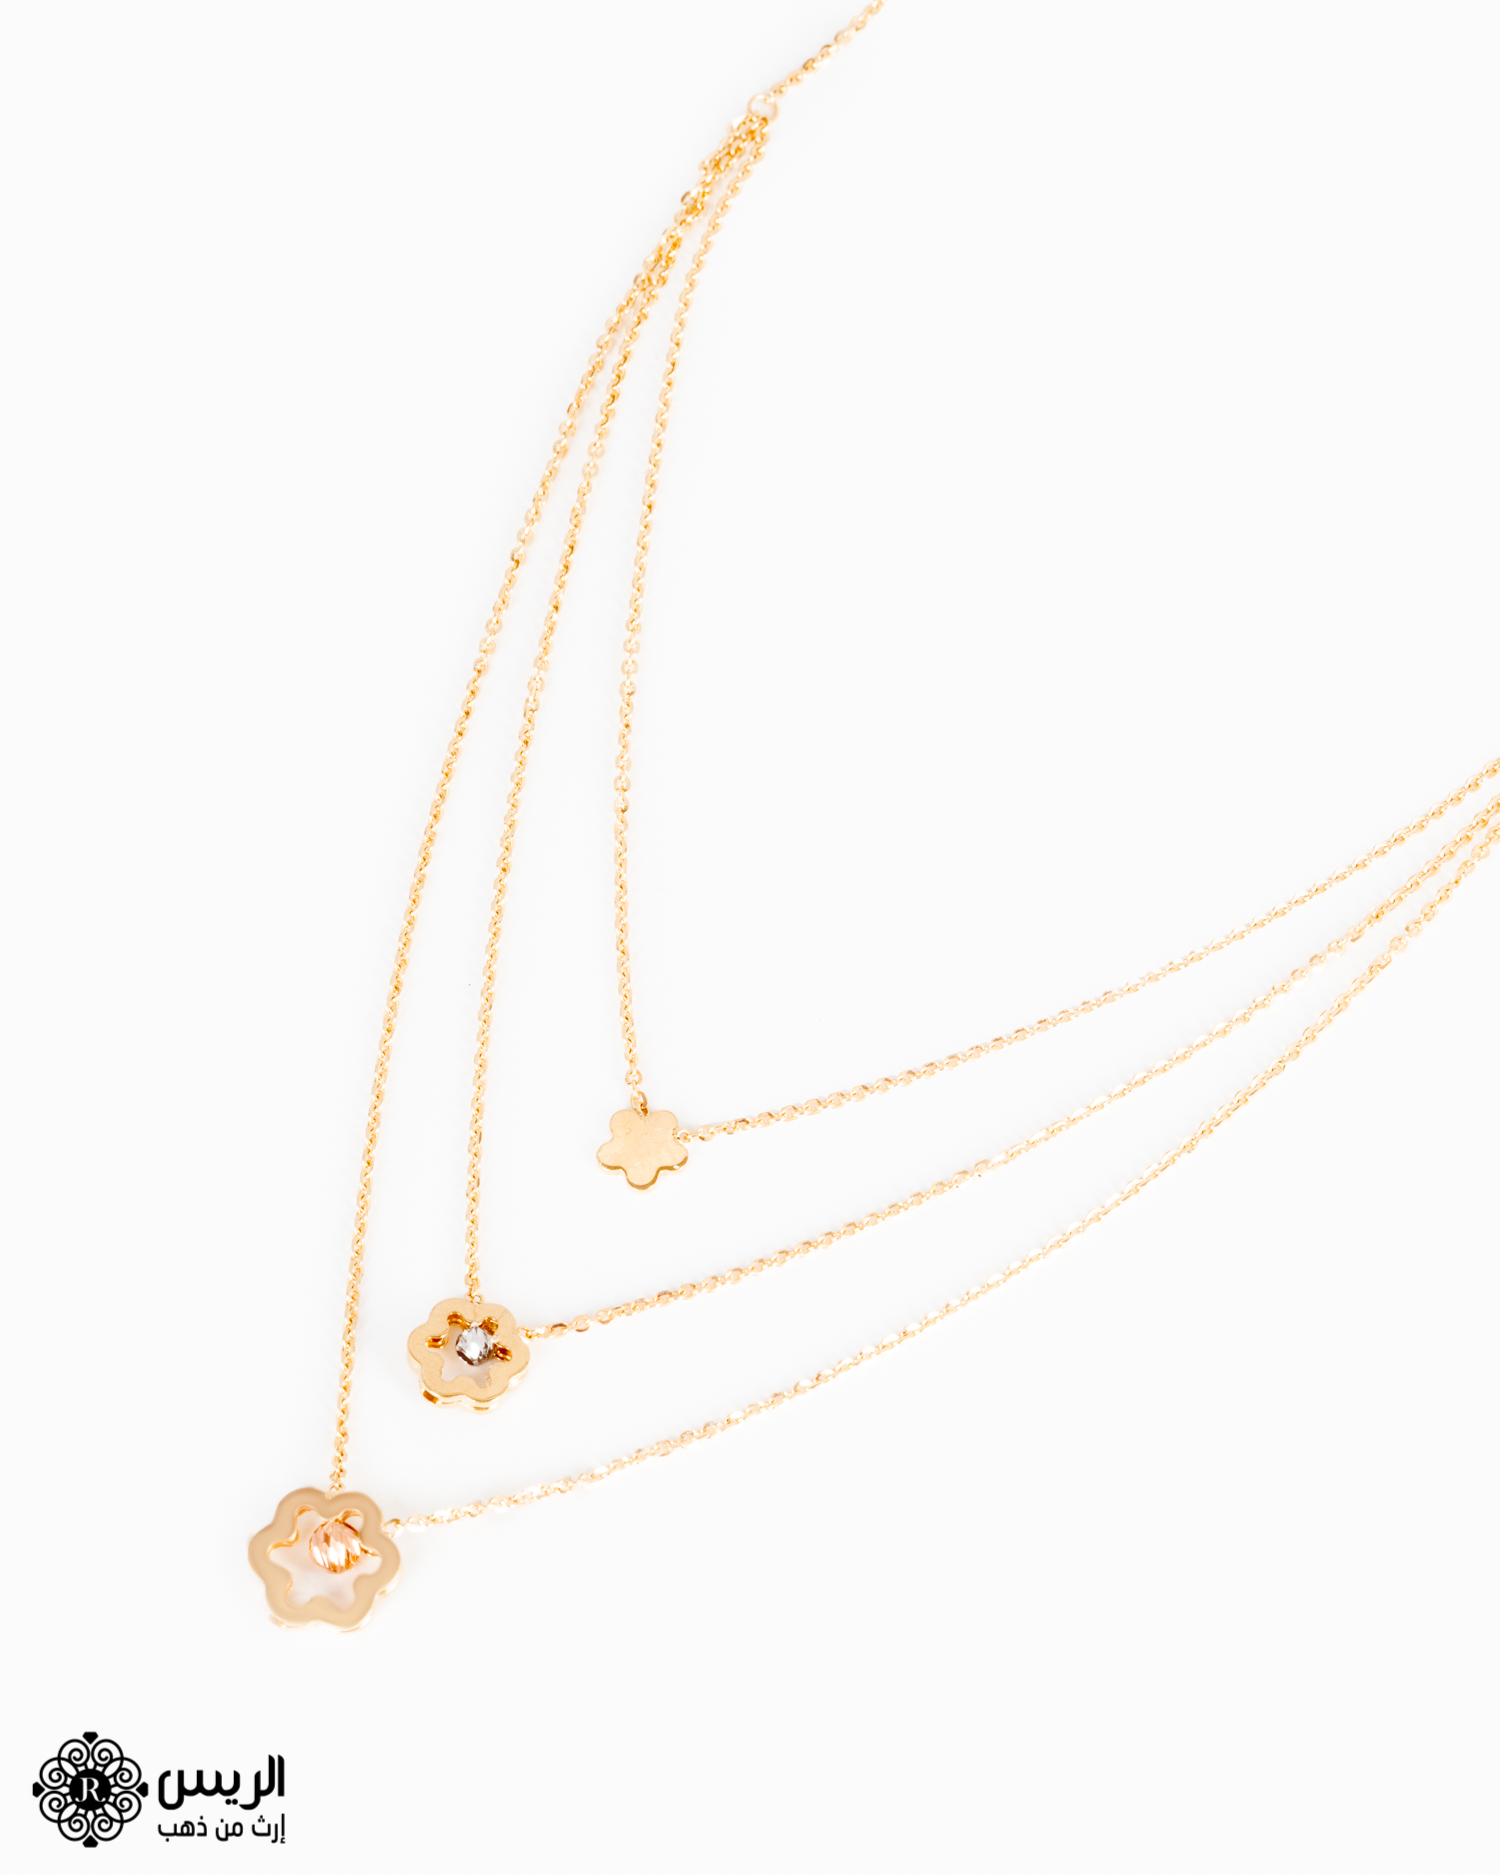 Raies jewelry Necklace Italian Design three Levels عقد تصميم إيطالي ثلاث صفوف الريس للمجوهرات